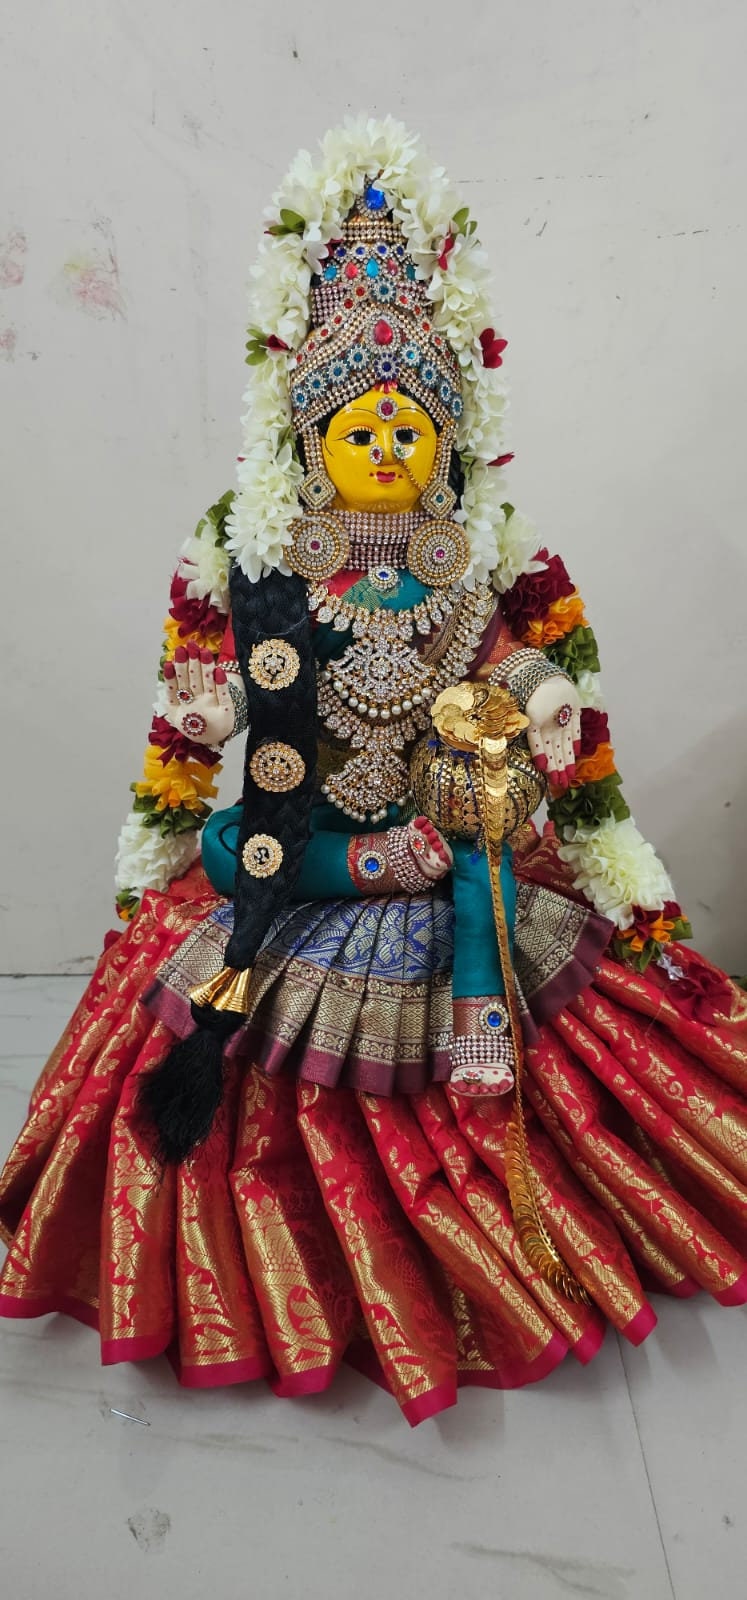 Details more than 110 saree draping for lakshmi best